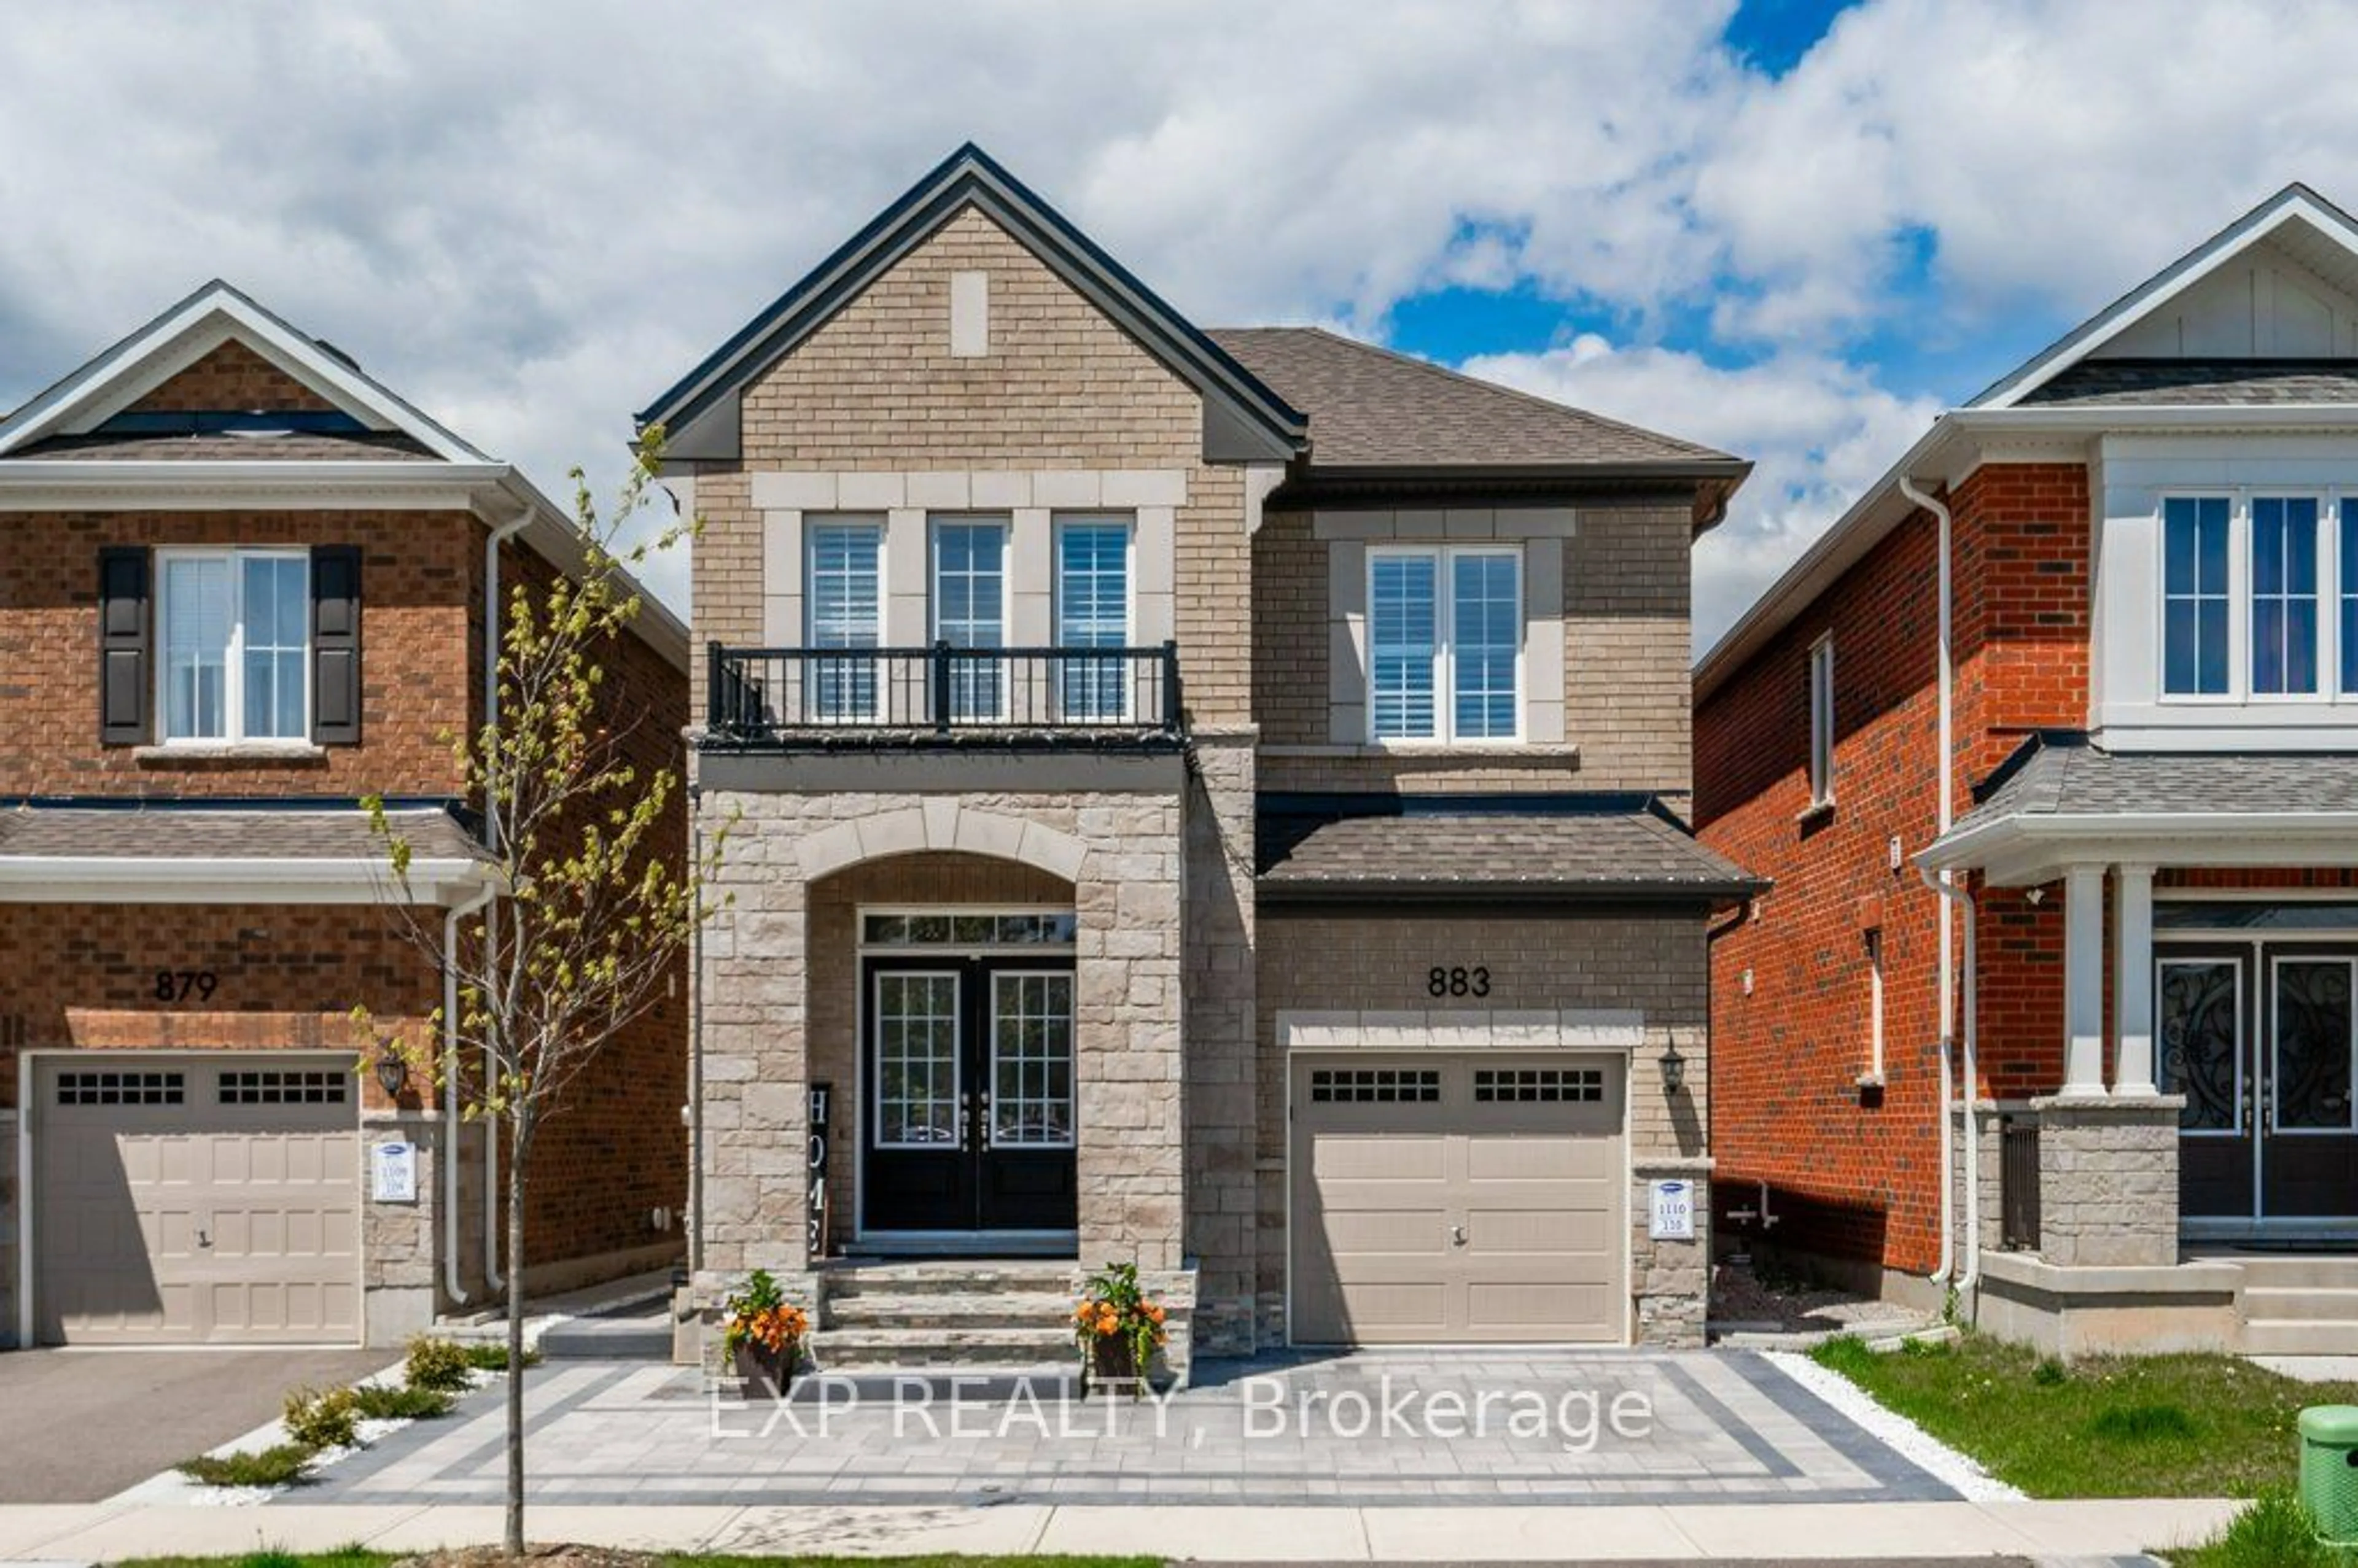 Home with brick exterior material for 883 Hickory Cres, Milton Ontario L9T 7E7